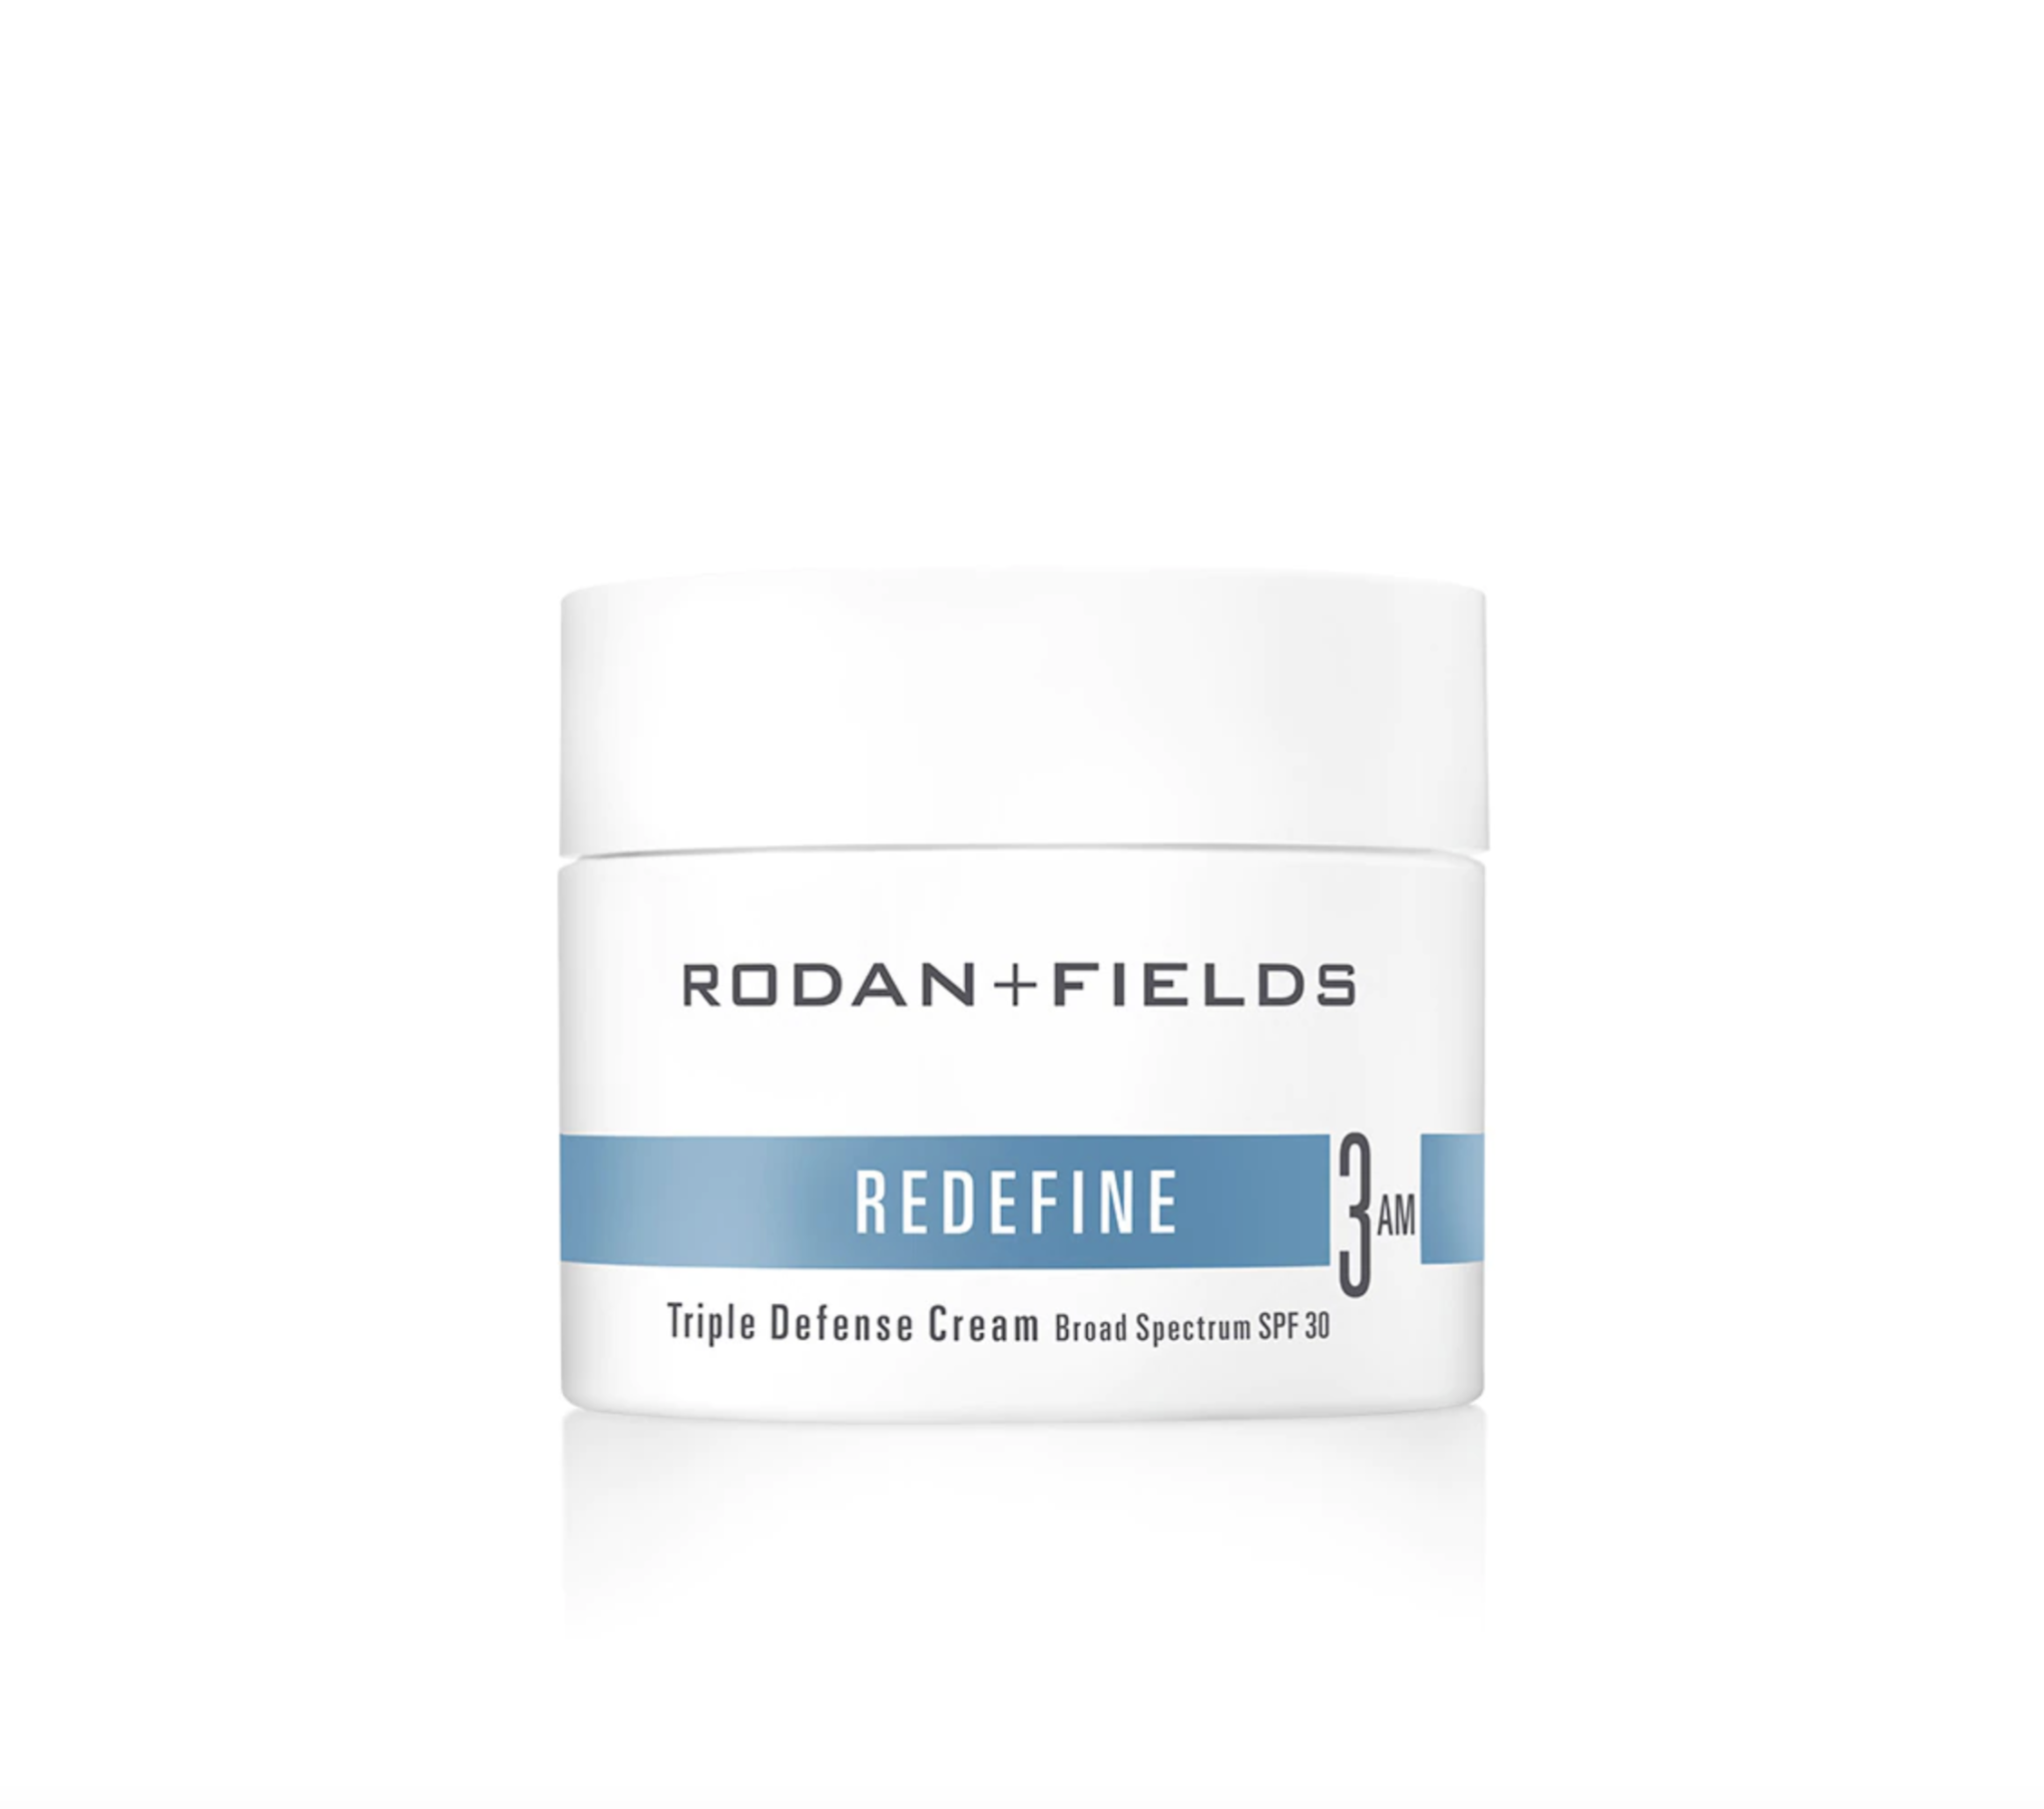 Rodan + Fields REDEFINE Triple Defense Cream Broad Spectrum SPF 30 | Debbie Savage Orange County Beauty and Lifestyle Blogger